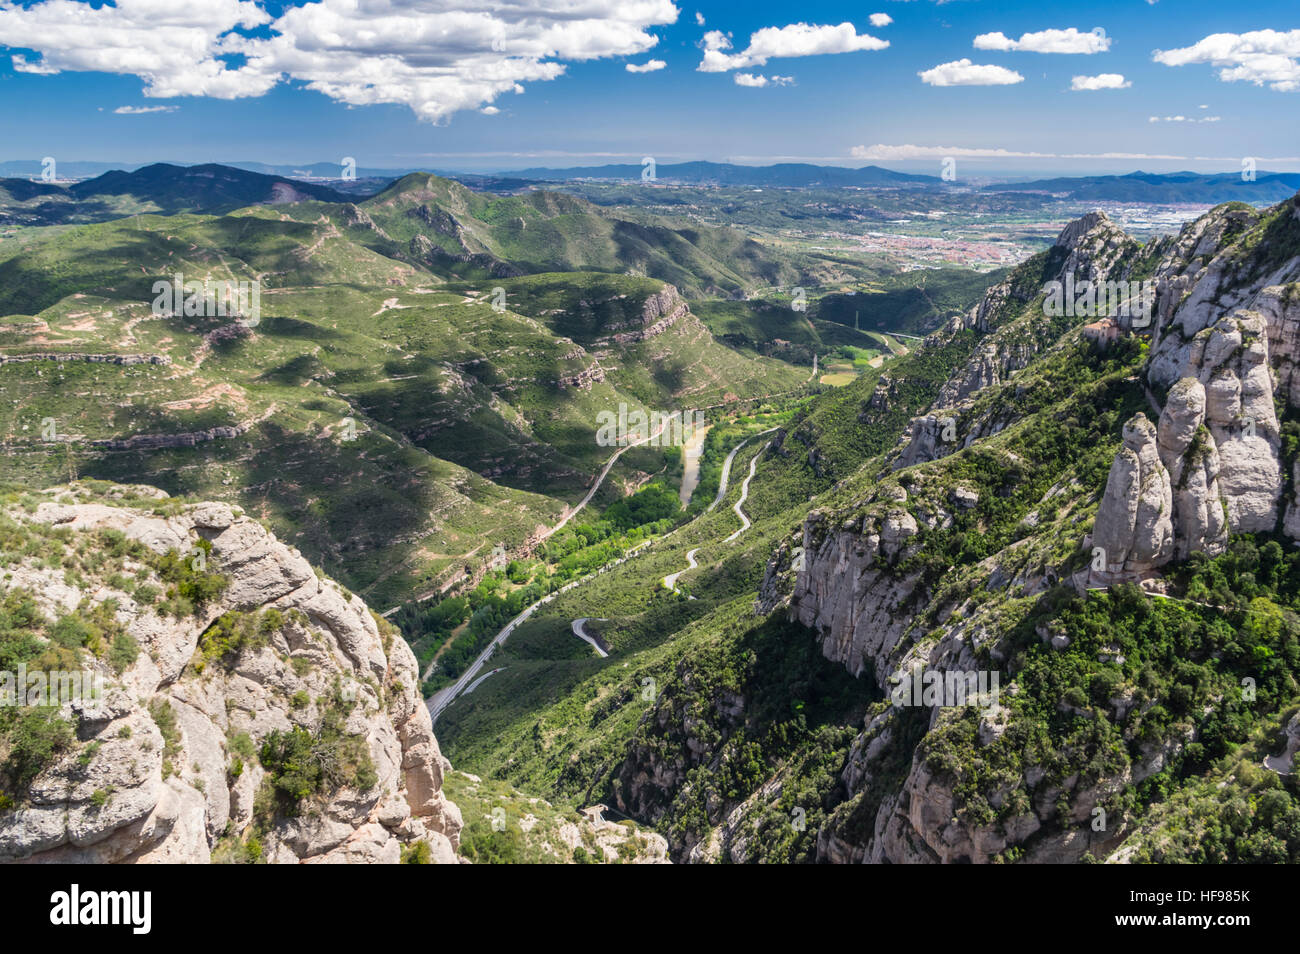 Valley of the Llobregat river in Monistrol de Montserrat, Catalonia, Spain. Stock Photo